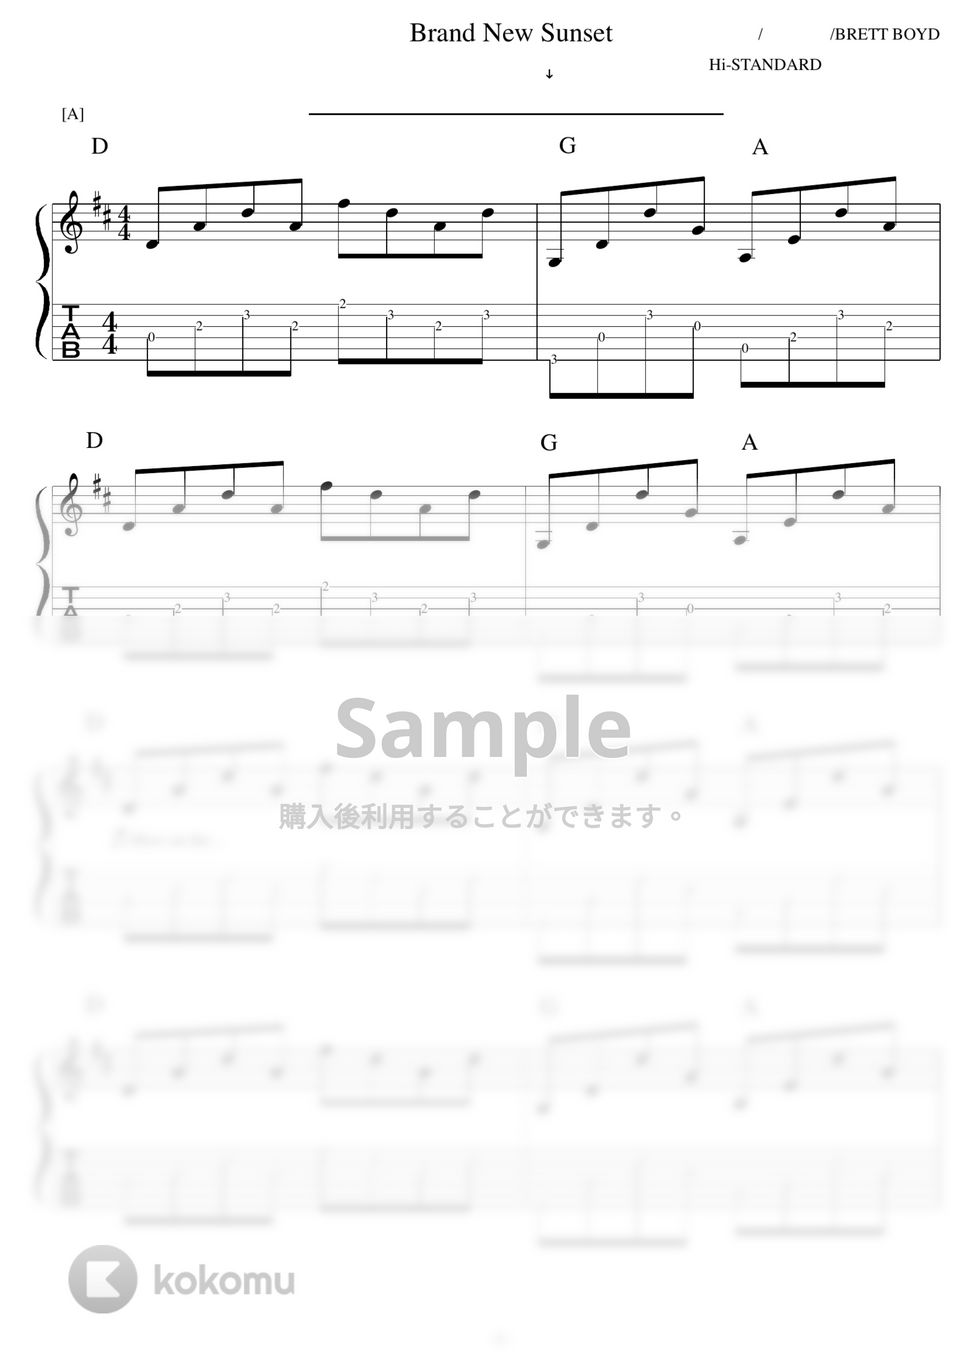 Hi-STANDARD - Brand New Sunset ギター演奏動画付TAB譜 by バイトーン音楽教室